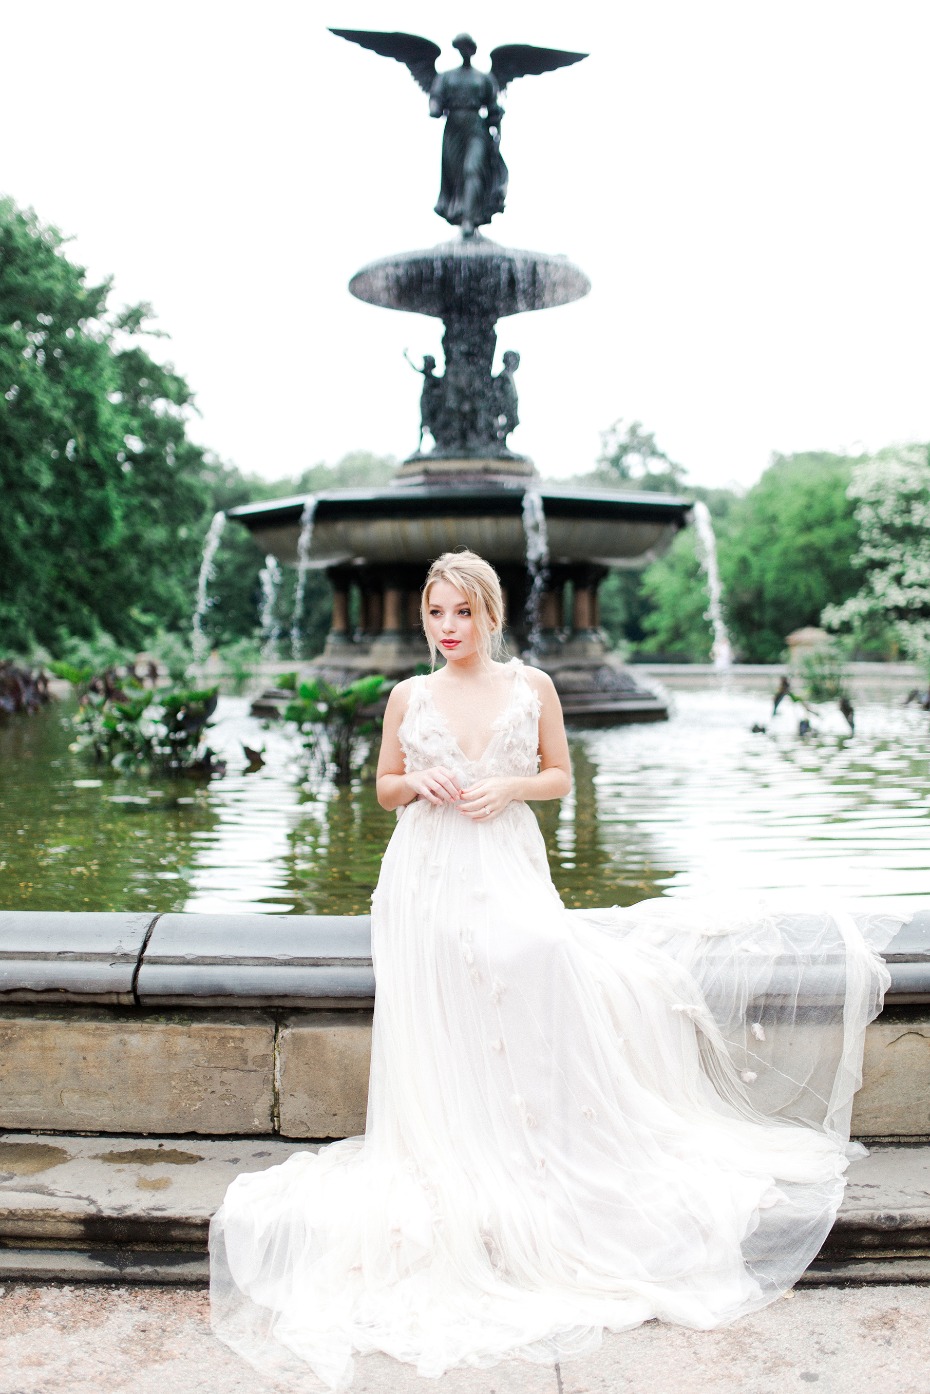 Flowing Samuelle Couture wedding dress